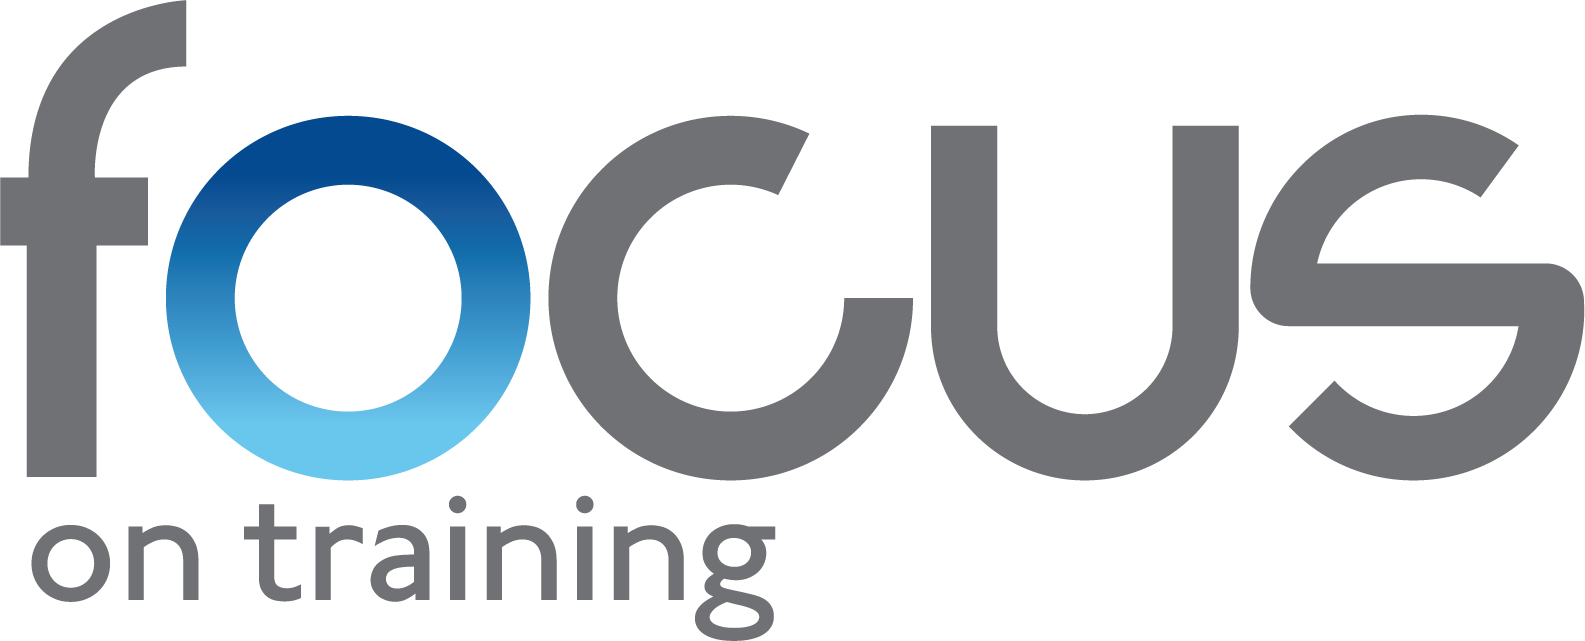 Focus on Training logo